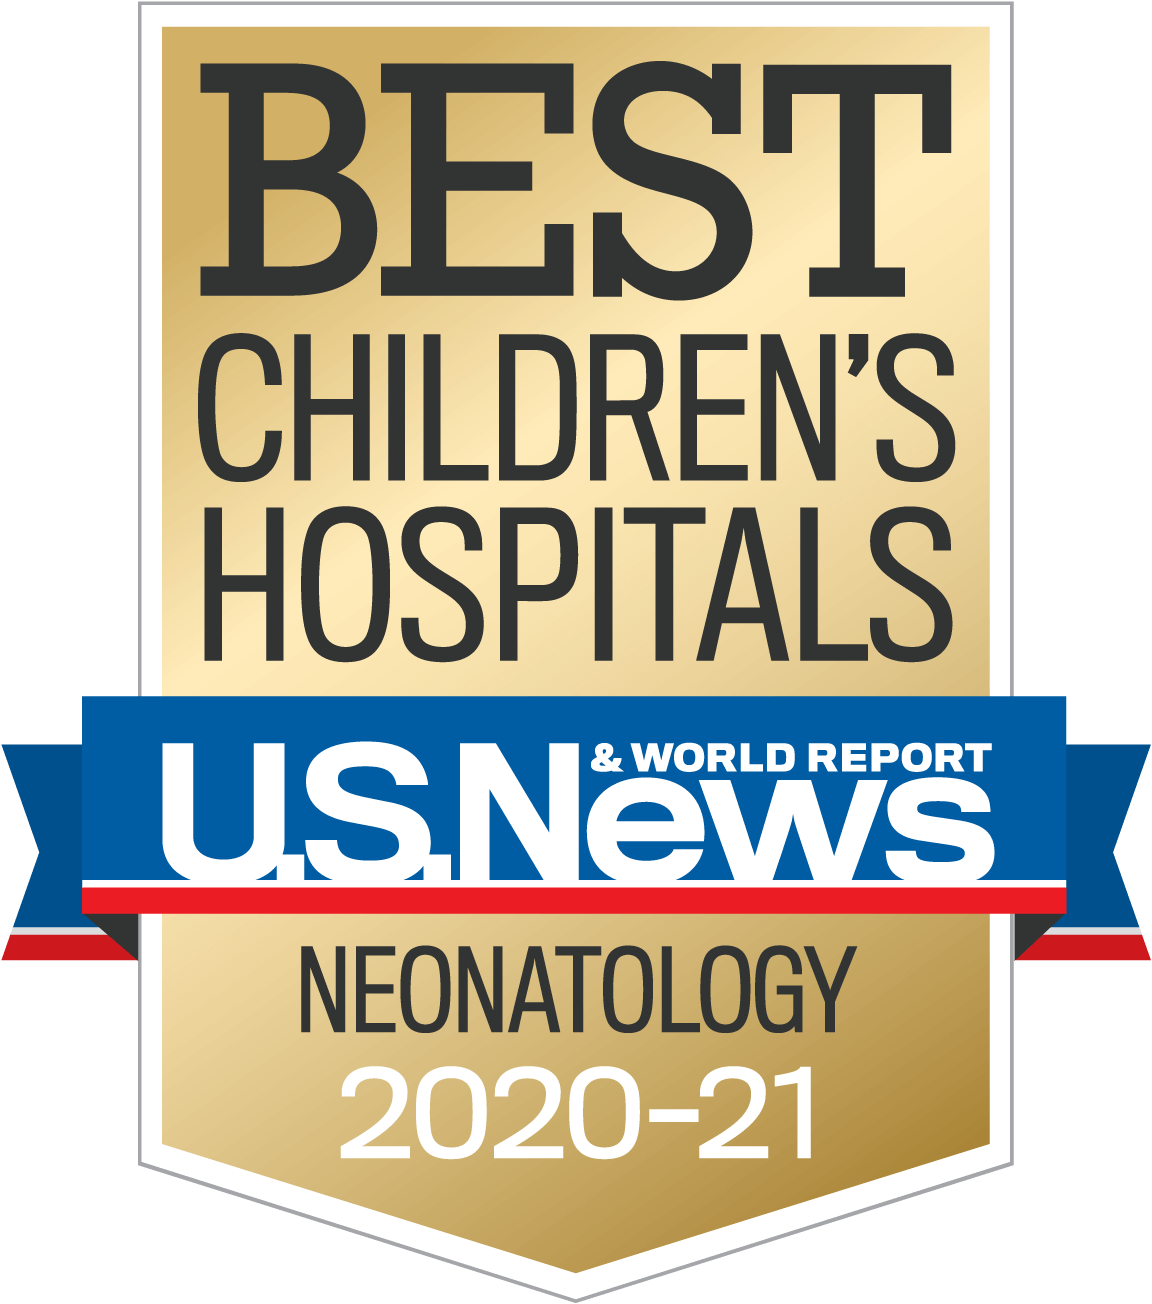 U.S. News & World Report ranking for Neonatology